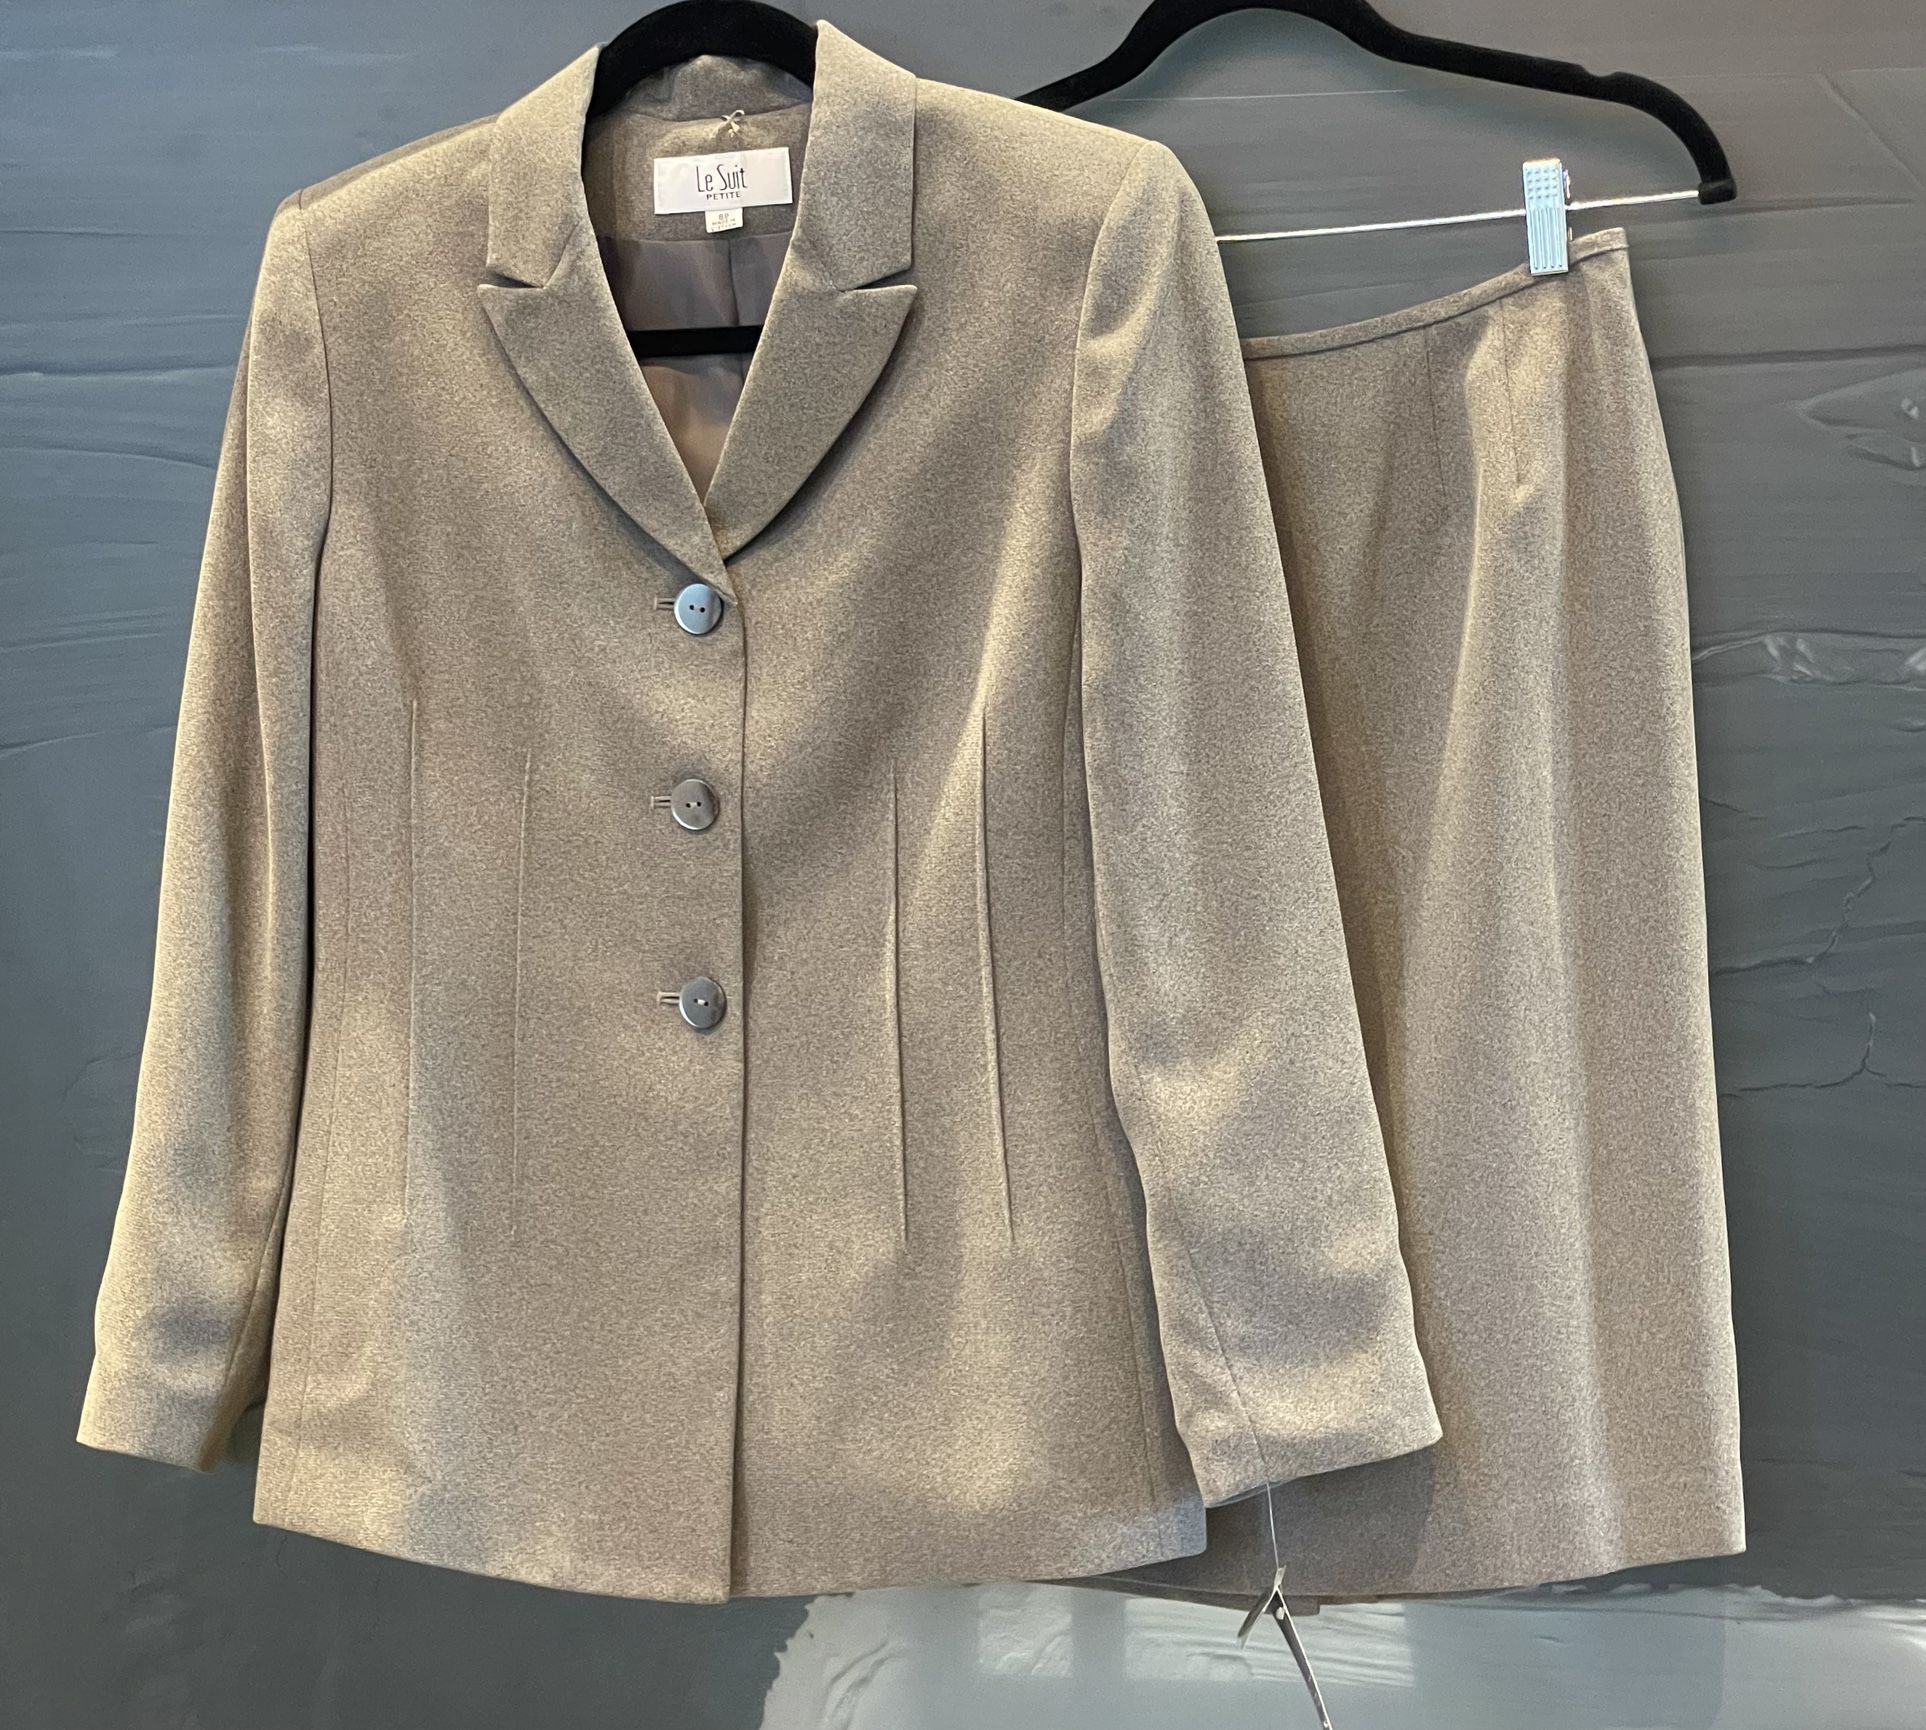 NWT Le Suit Skirt Gray Suit w/Long Sleeve Jacket/Blazer Sz 8 P